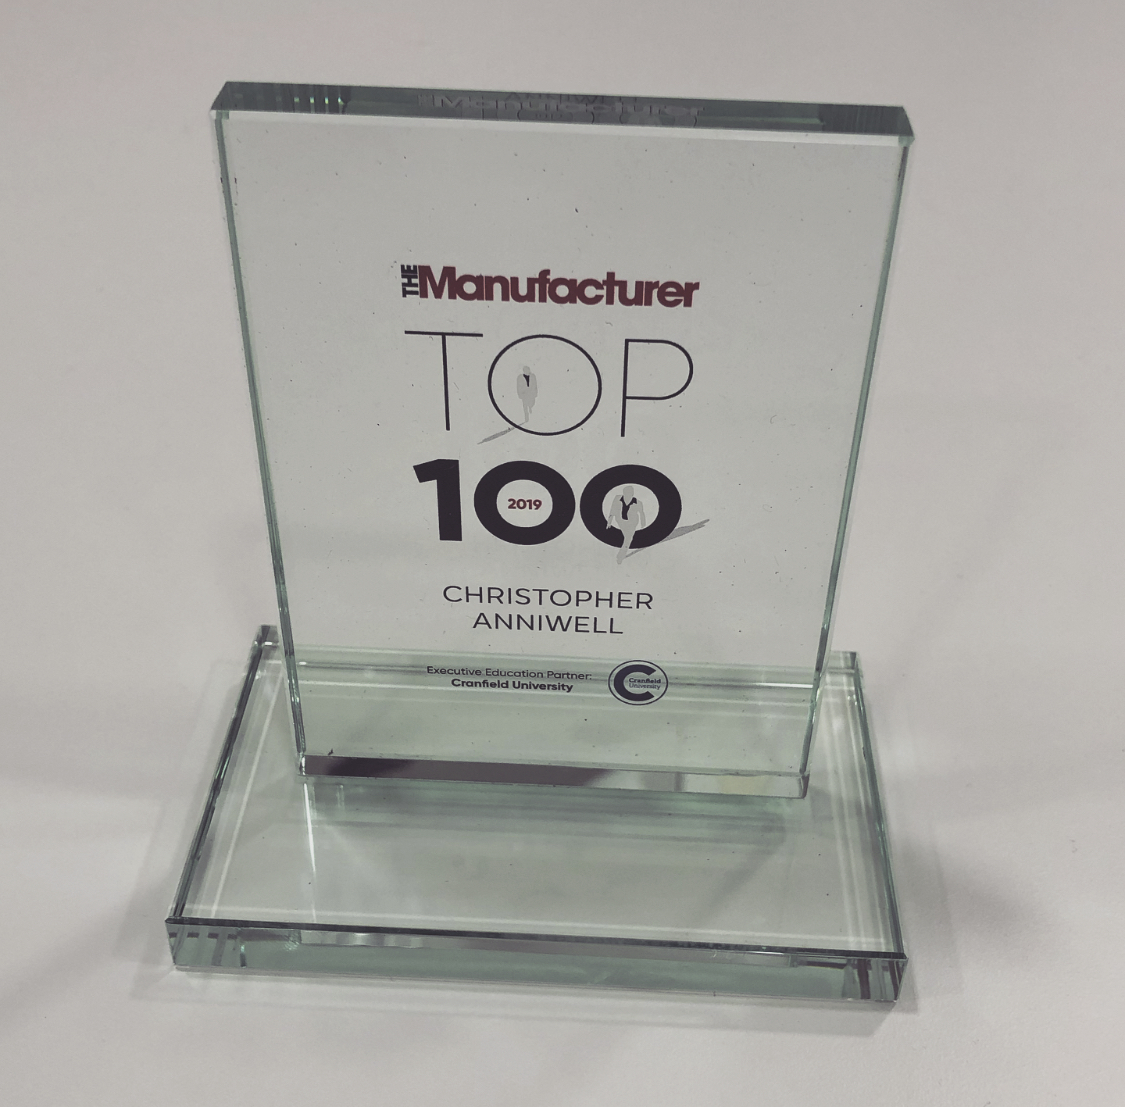 Top 100 Manufacturer 2019